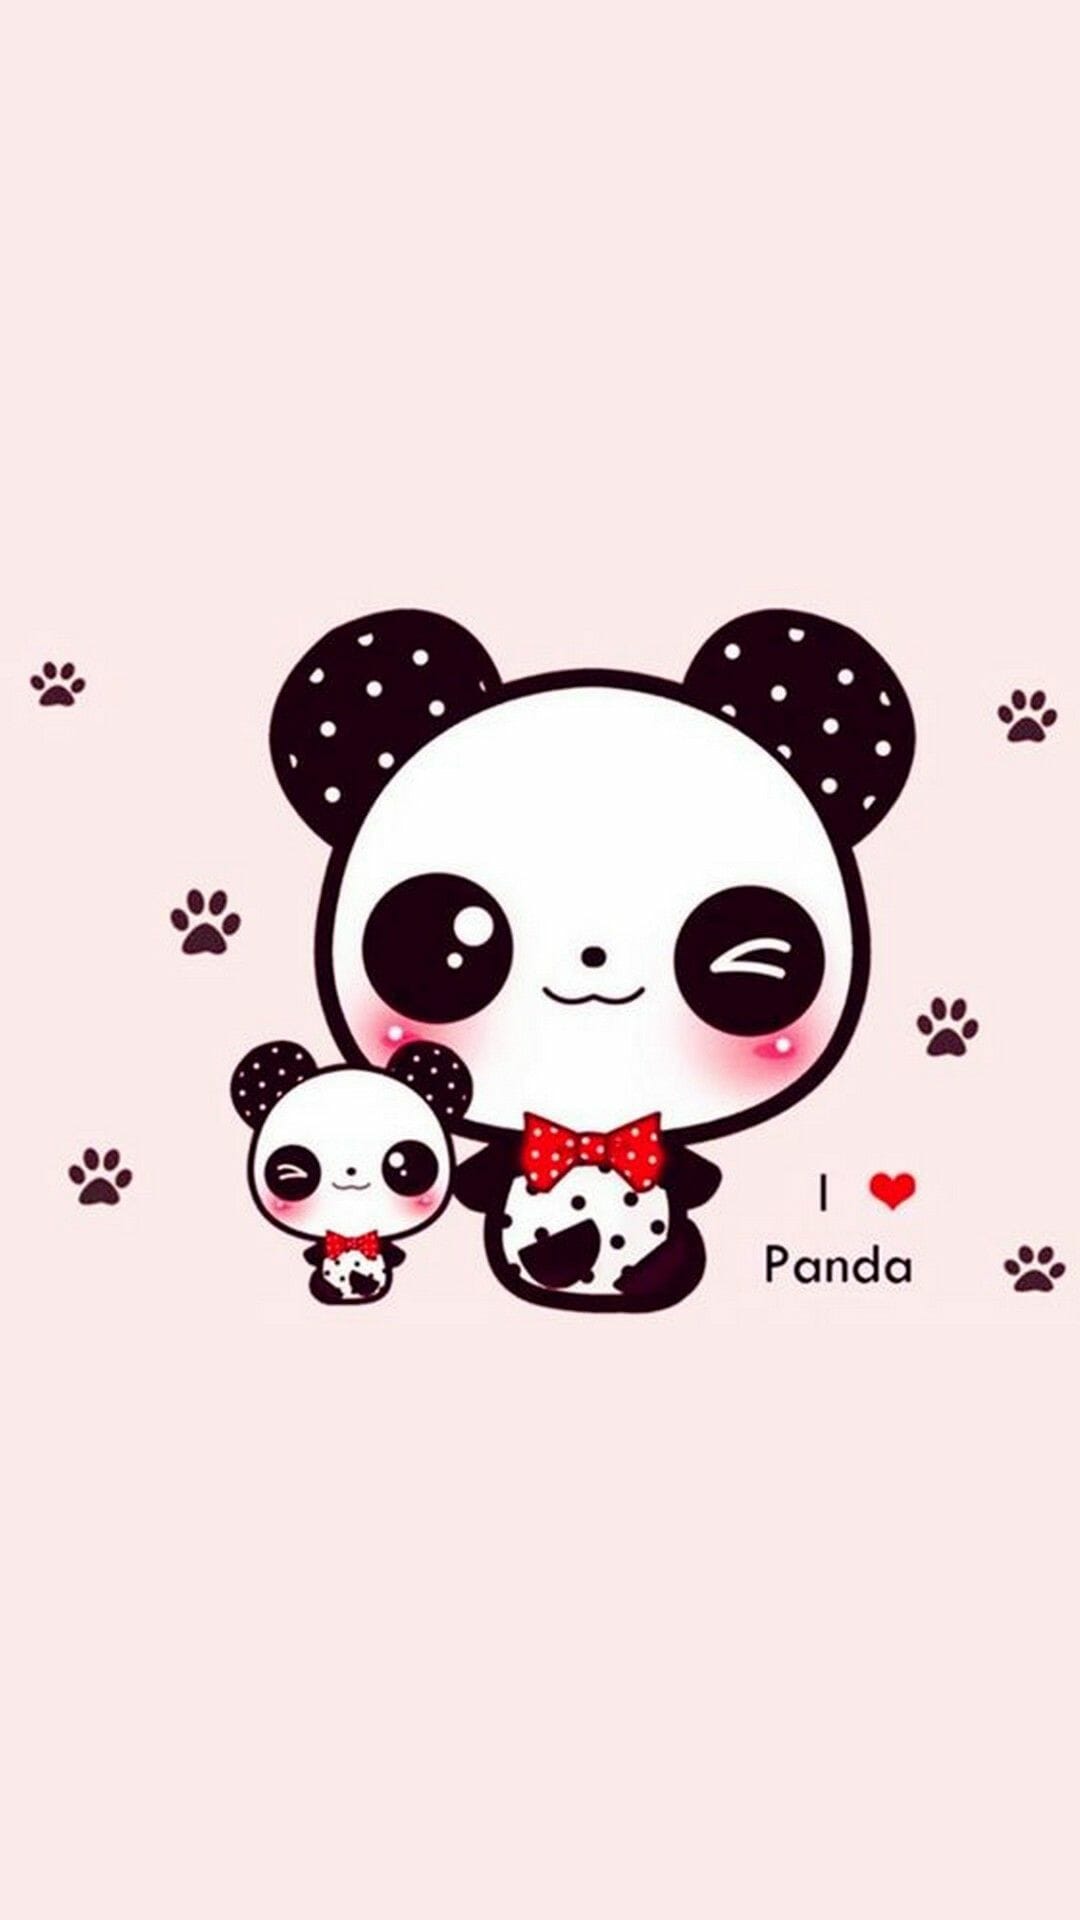 Cute Panda Wallpaper For iPhone. 2019 3D iPhone Wallpaper (2022)